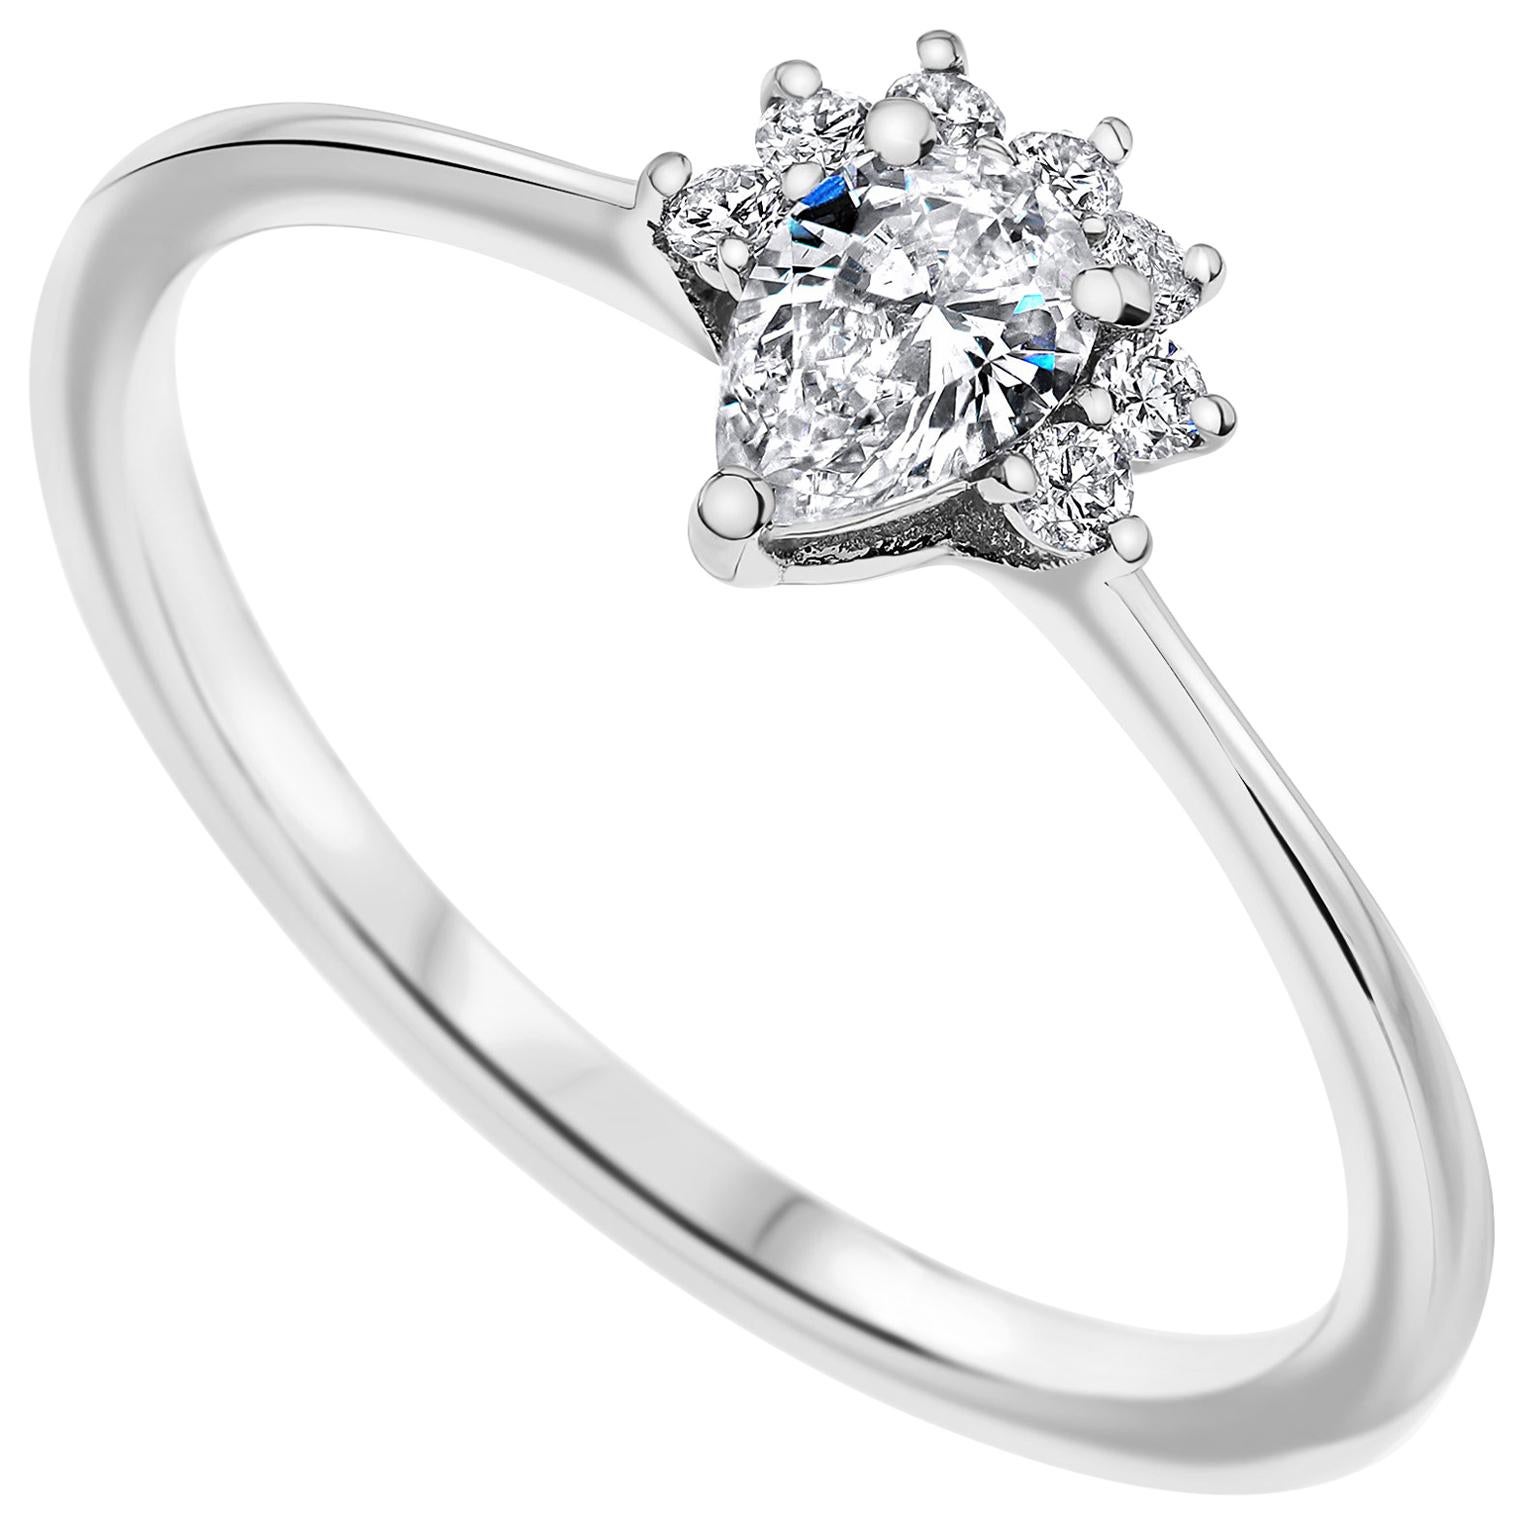 0.23 Carat Pear & Round Cut Diamonds Crown Ring 14k White Gold - Shlomit Rogel For Sale